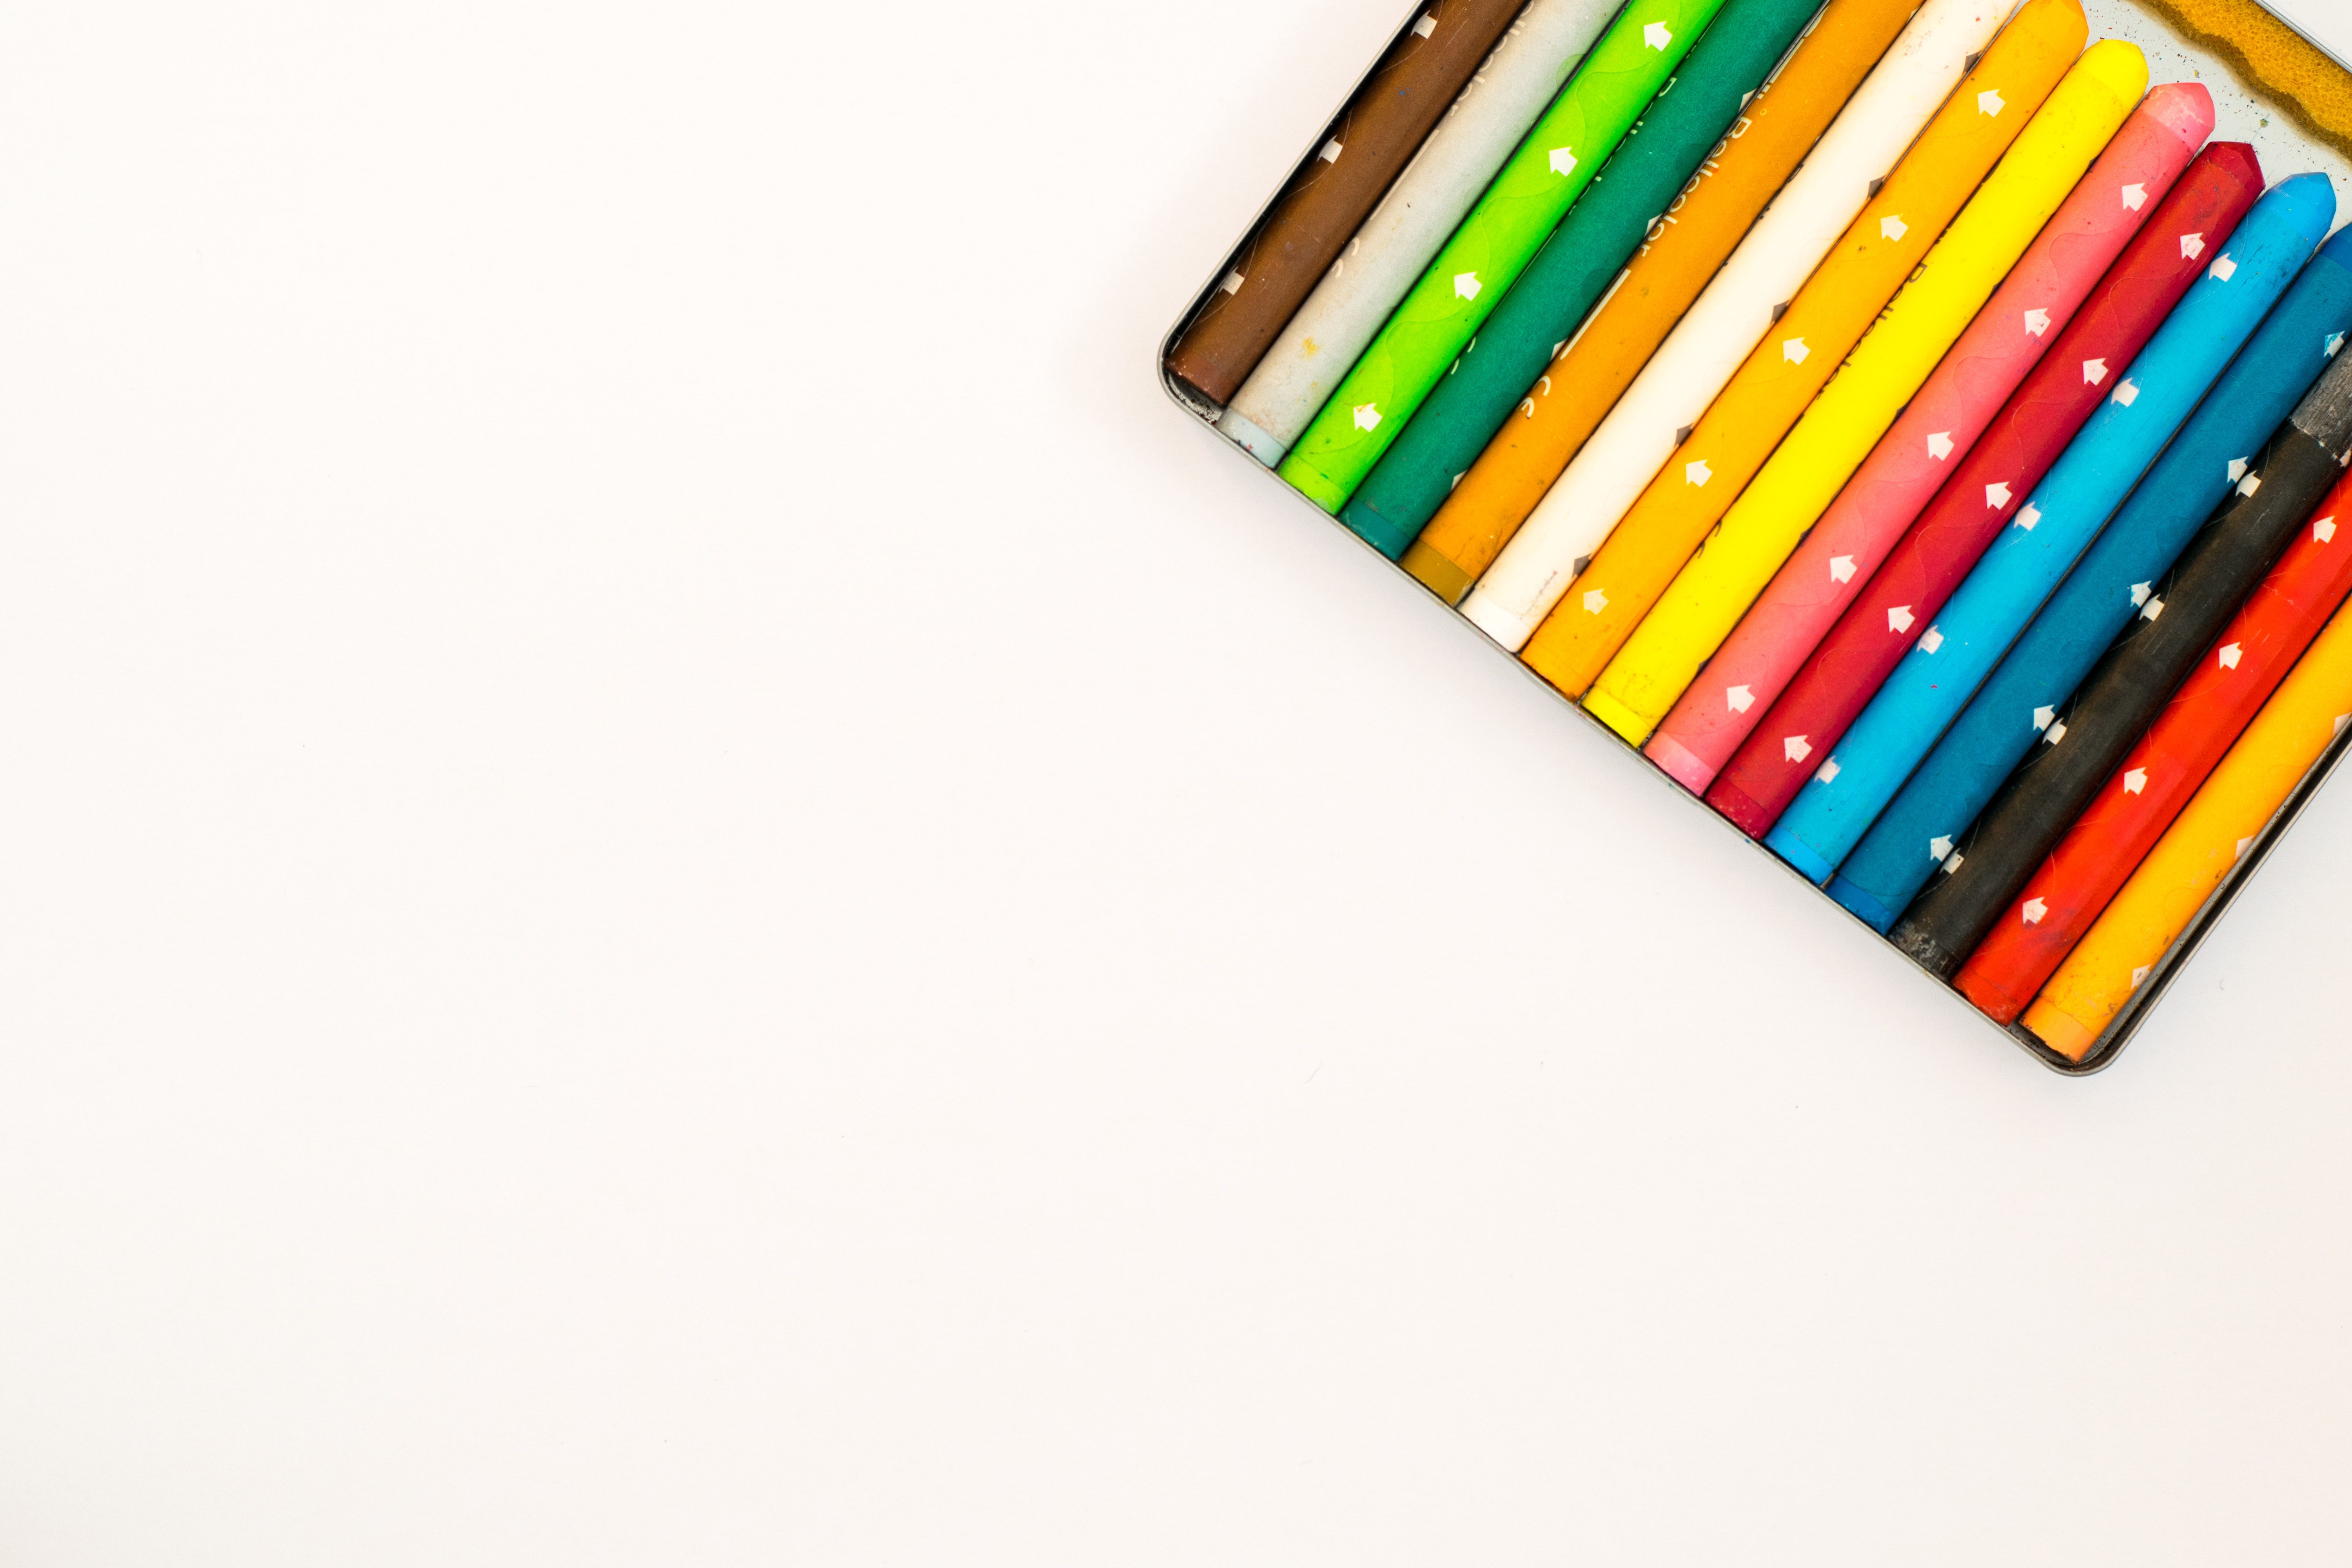 Free photo: Multi Colored Pencils over White Background